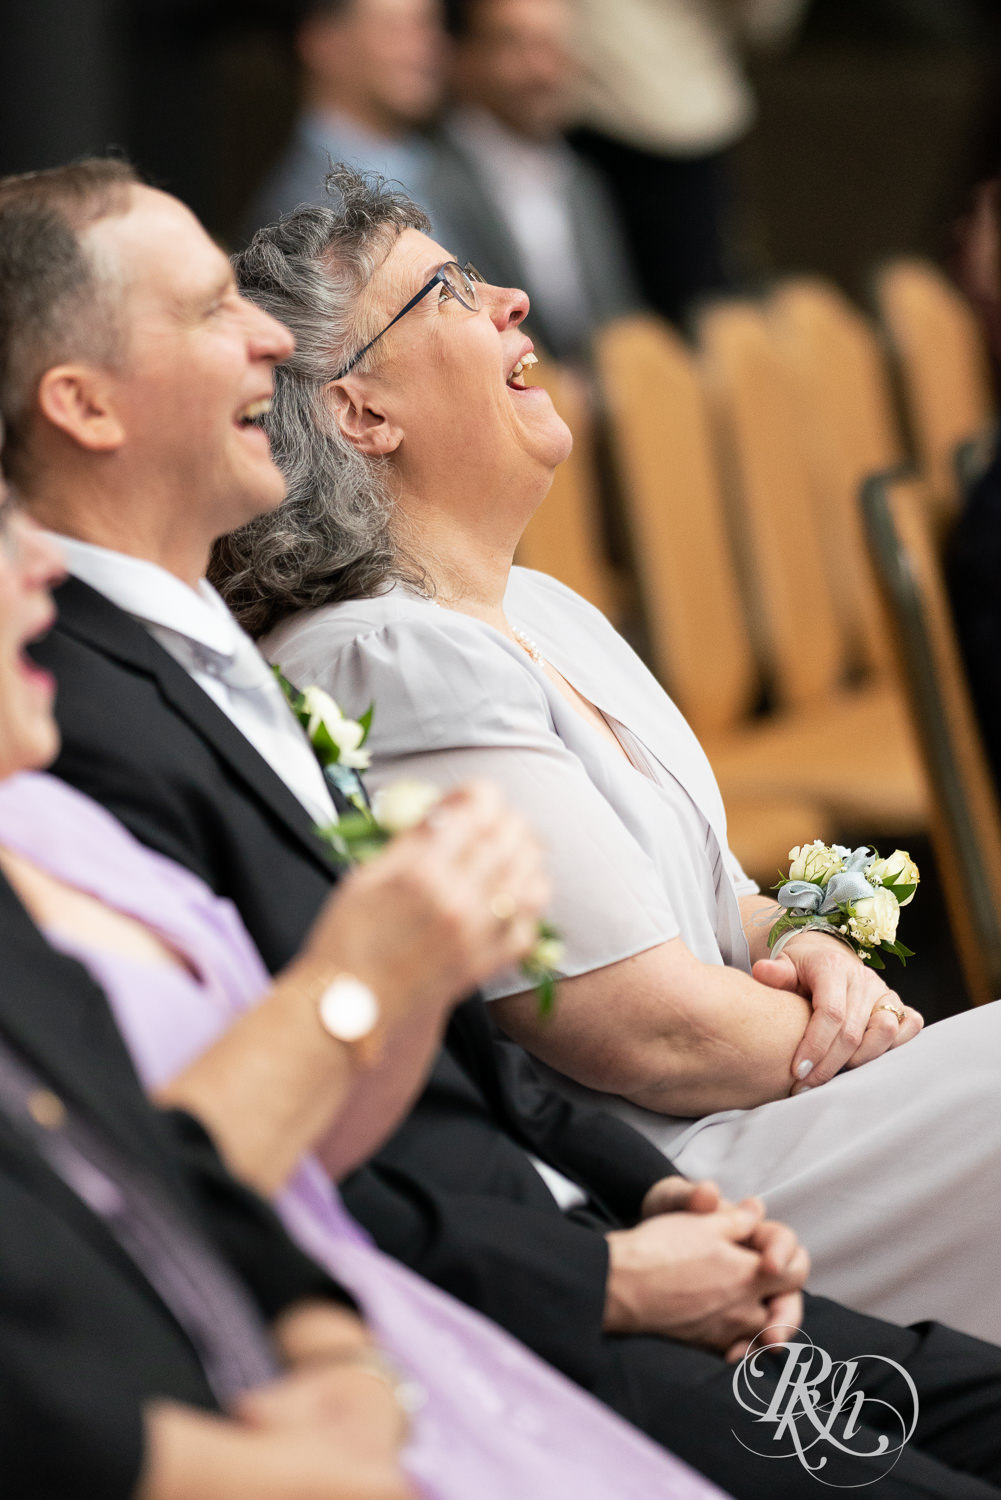 Groom's mom laughs during wedding ceremony at Doubletree Hilton Saint Paul in Saint Paul, Minnesota.